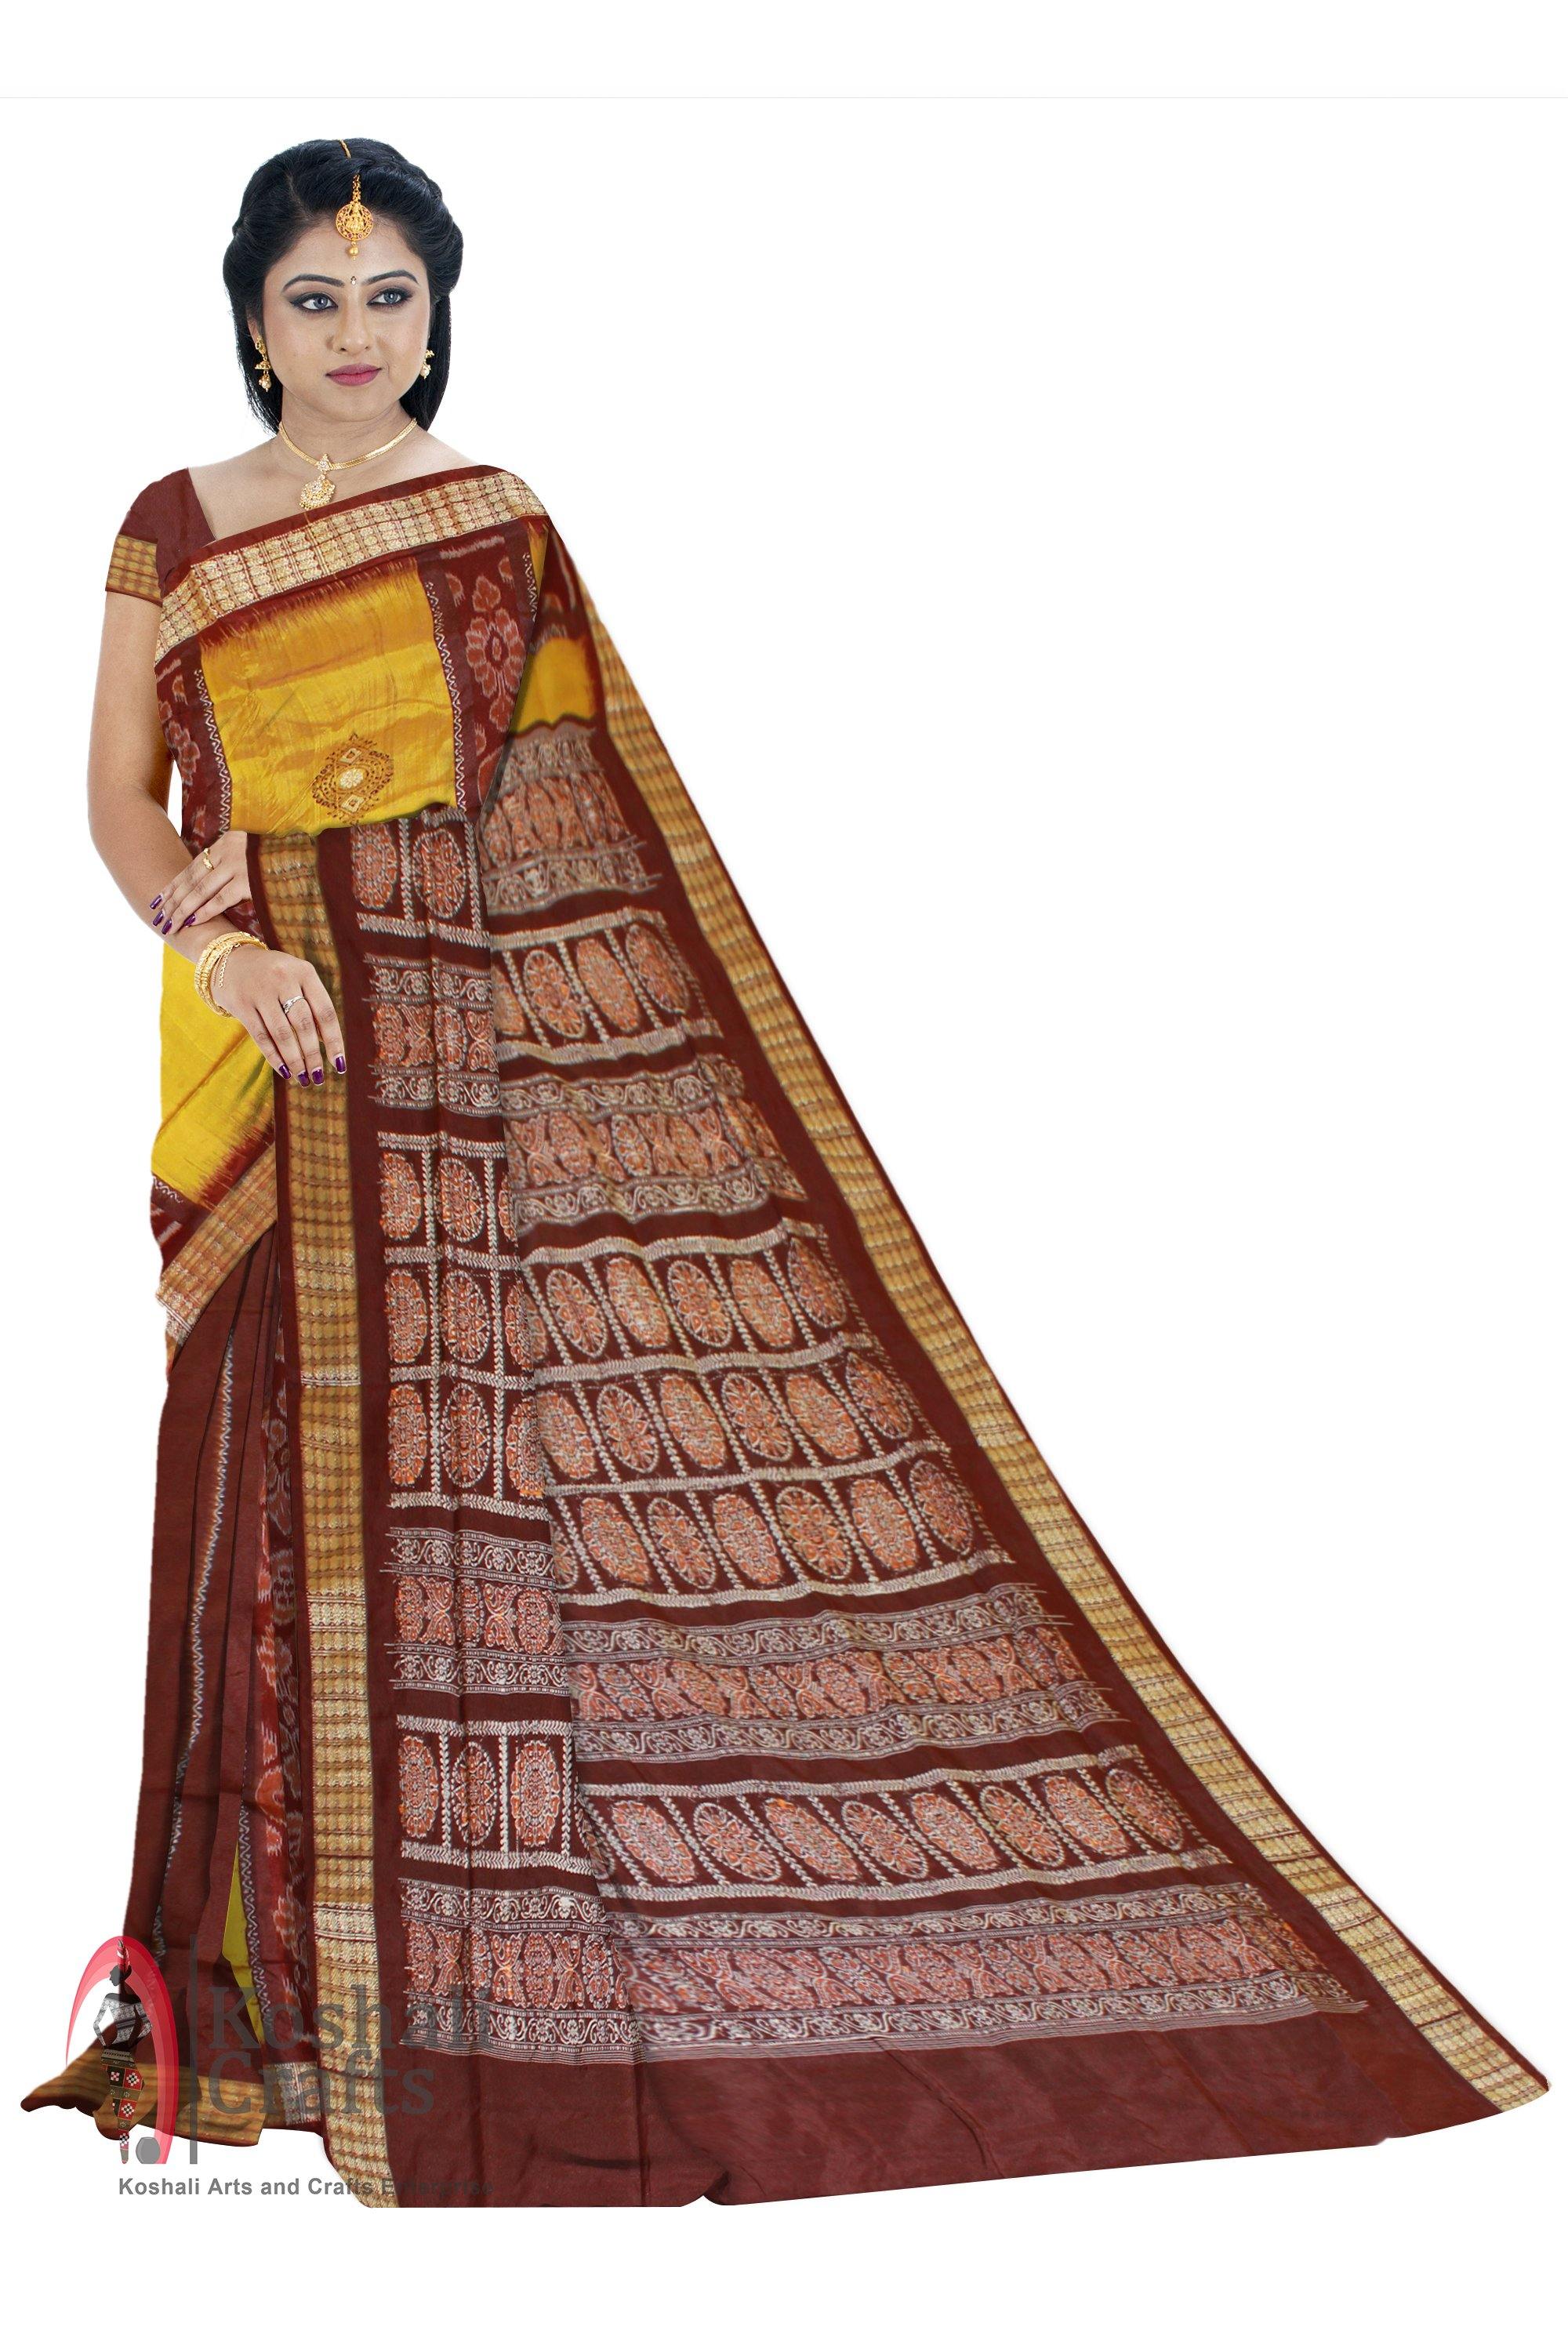 Exclusive Sambalpuri Barpali Mixed Patli pata Saree in Yellow & Maroon color body in Bomkei Pattern (with Blouse Piece) - Koshali Arts & Crafts Enterprise